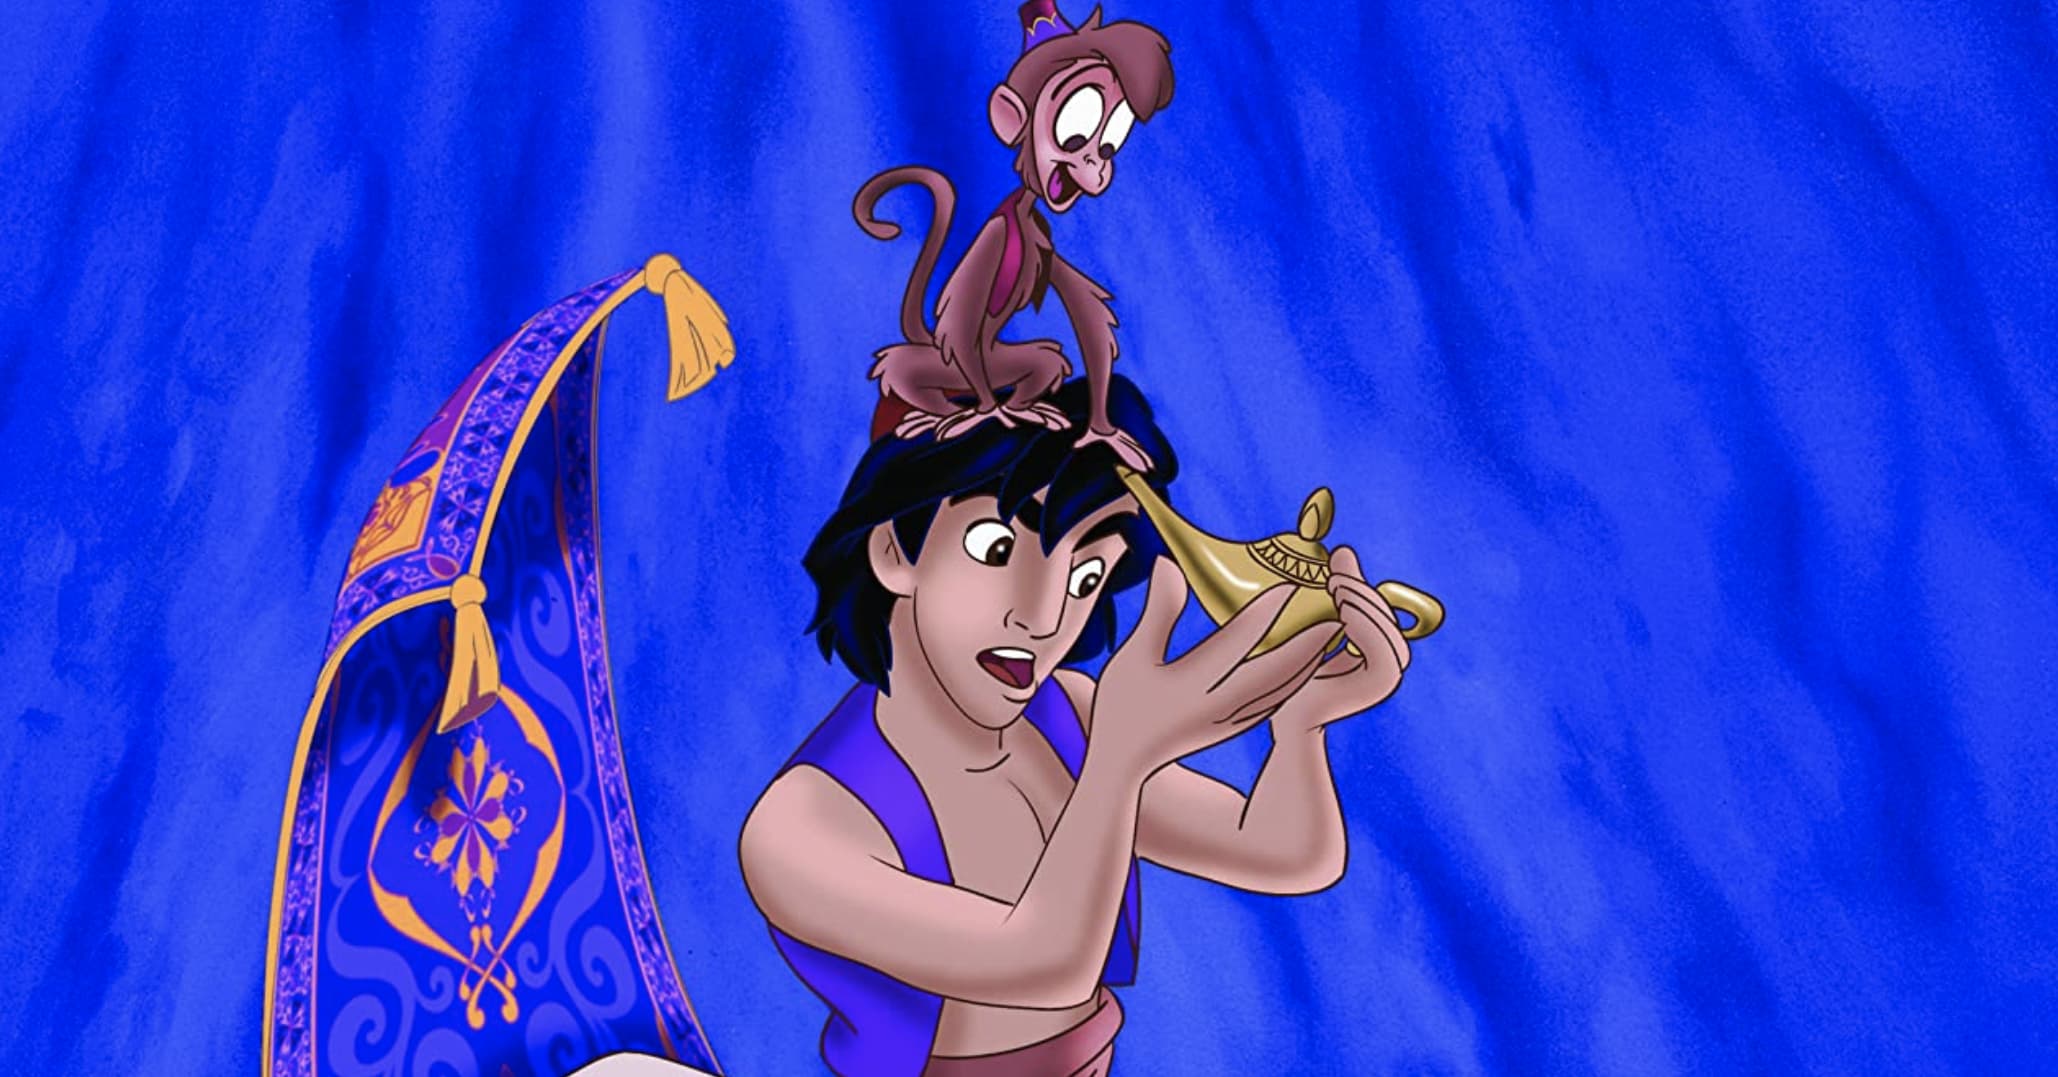 Behind The Scenes Of Disney's 'Aladdin'